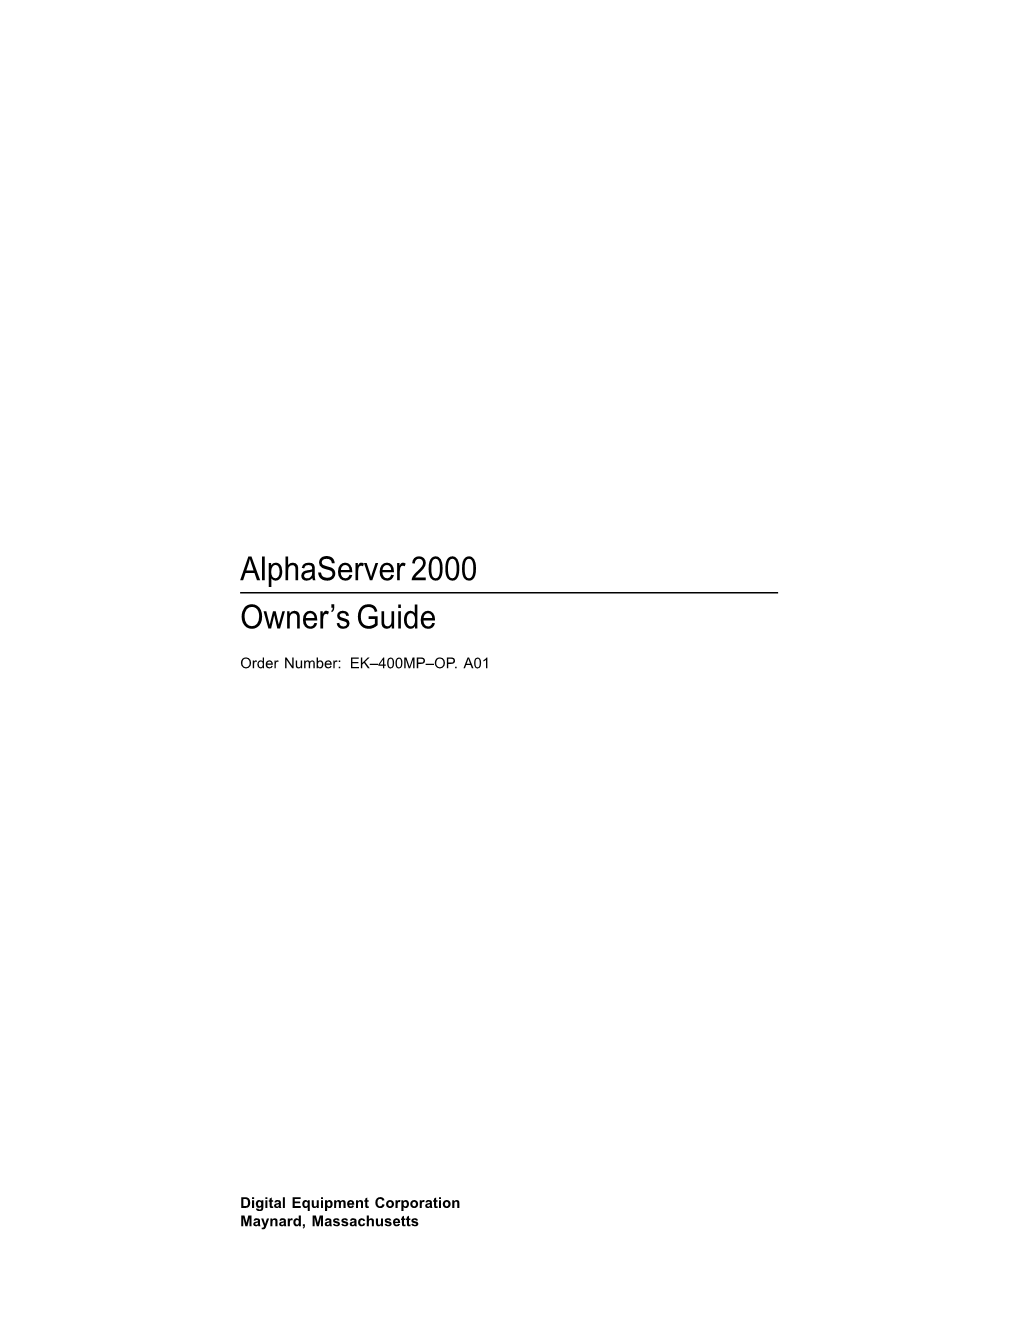 Alphaserver 2000 Owner's Guide